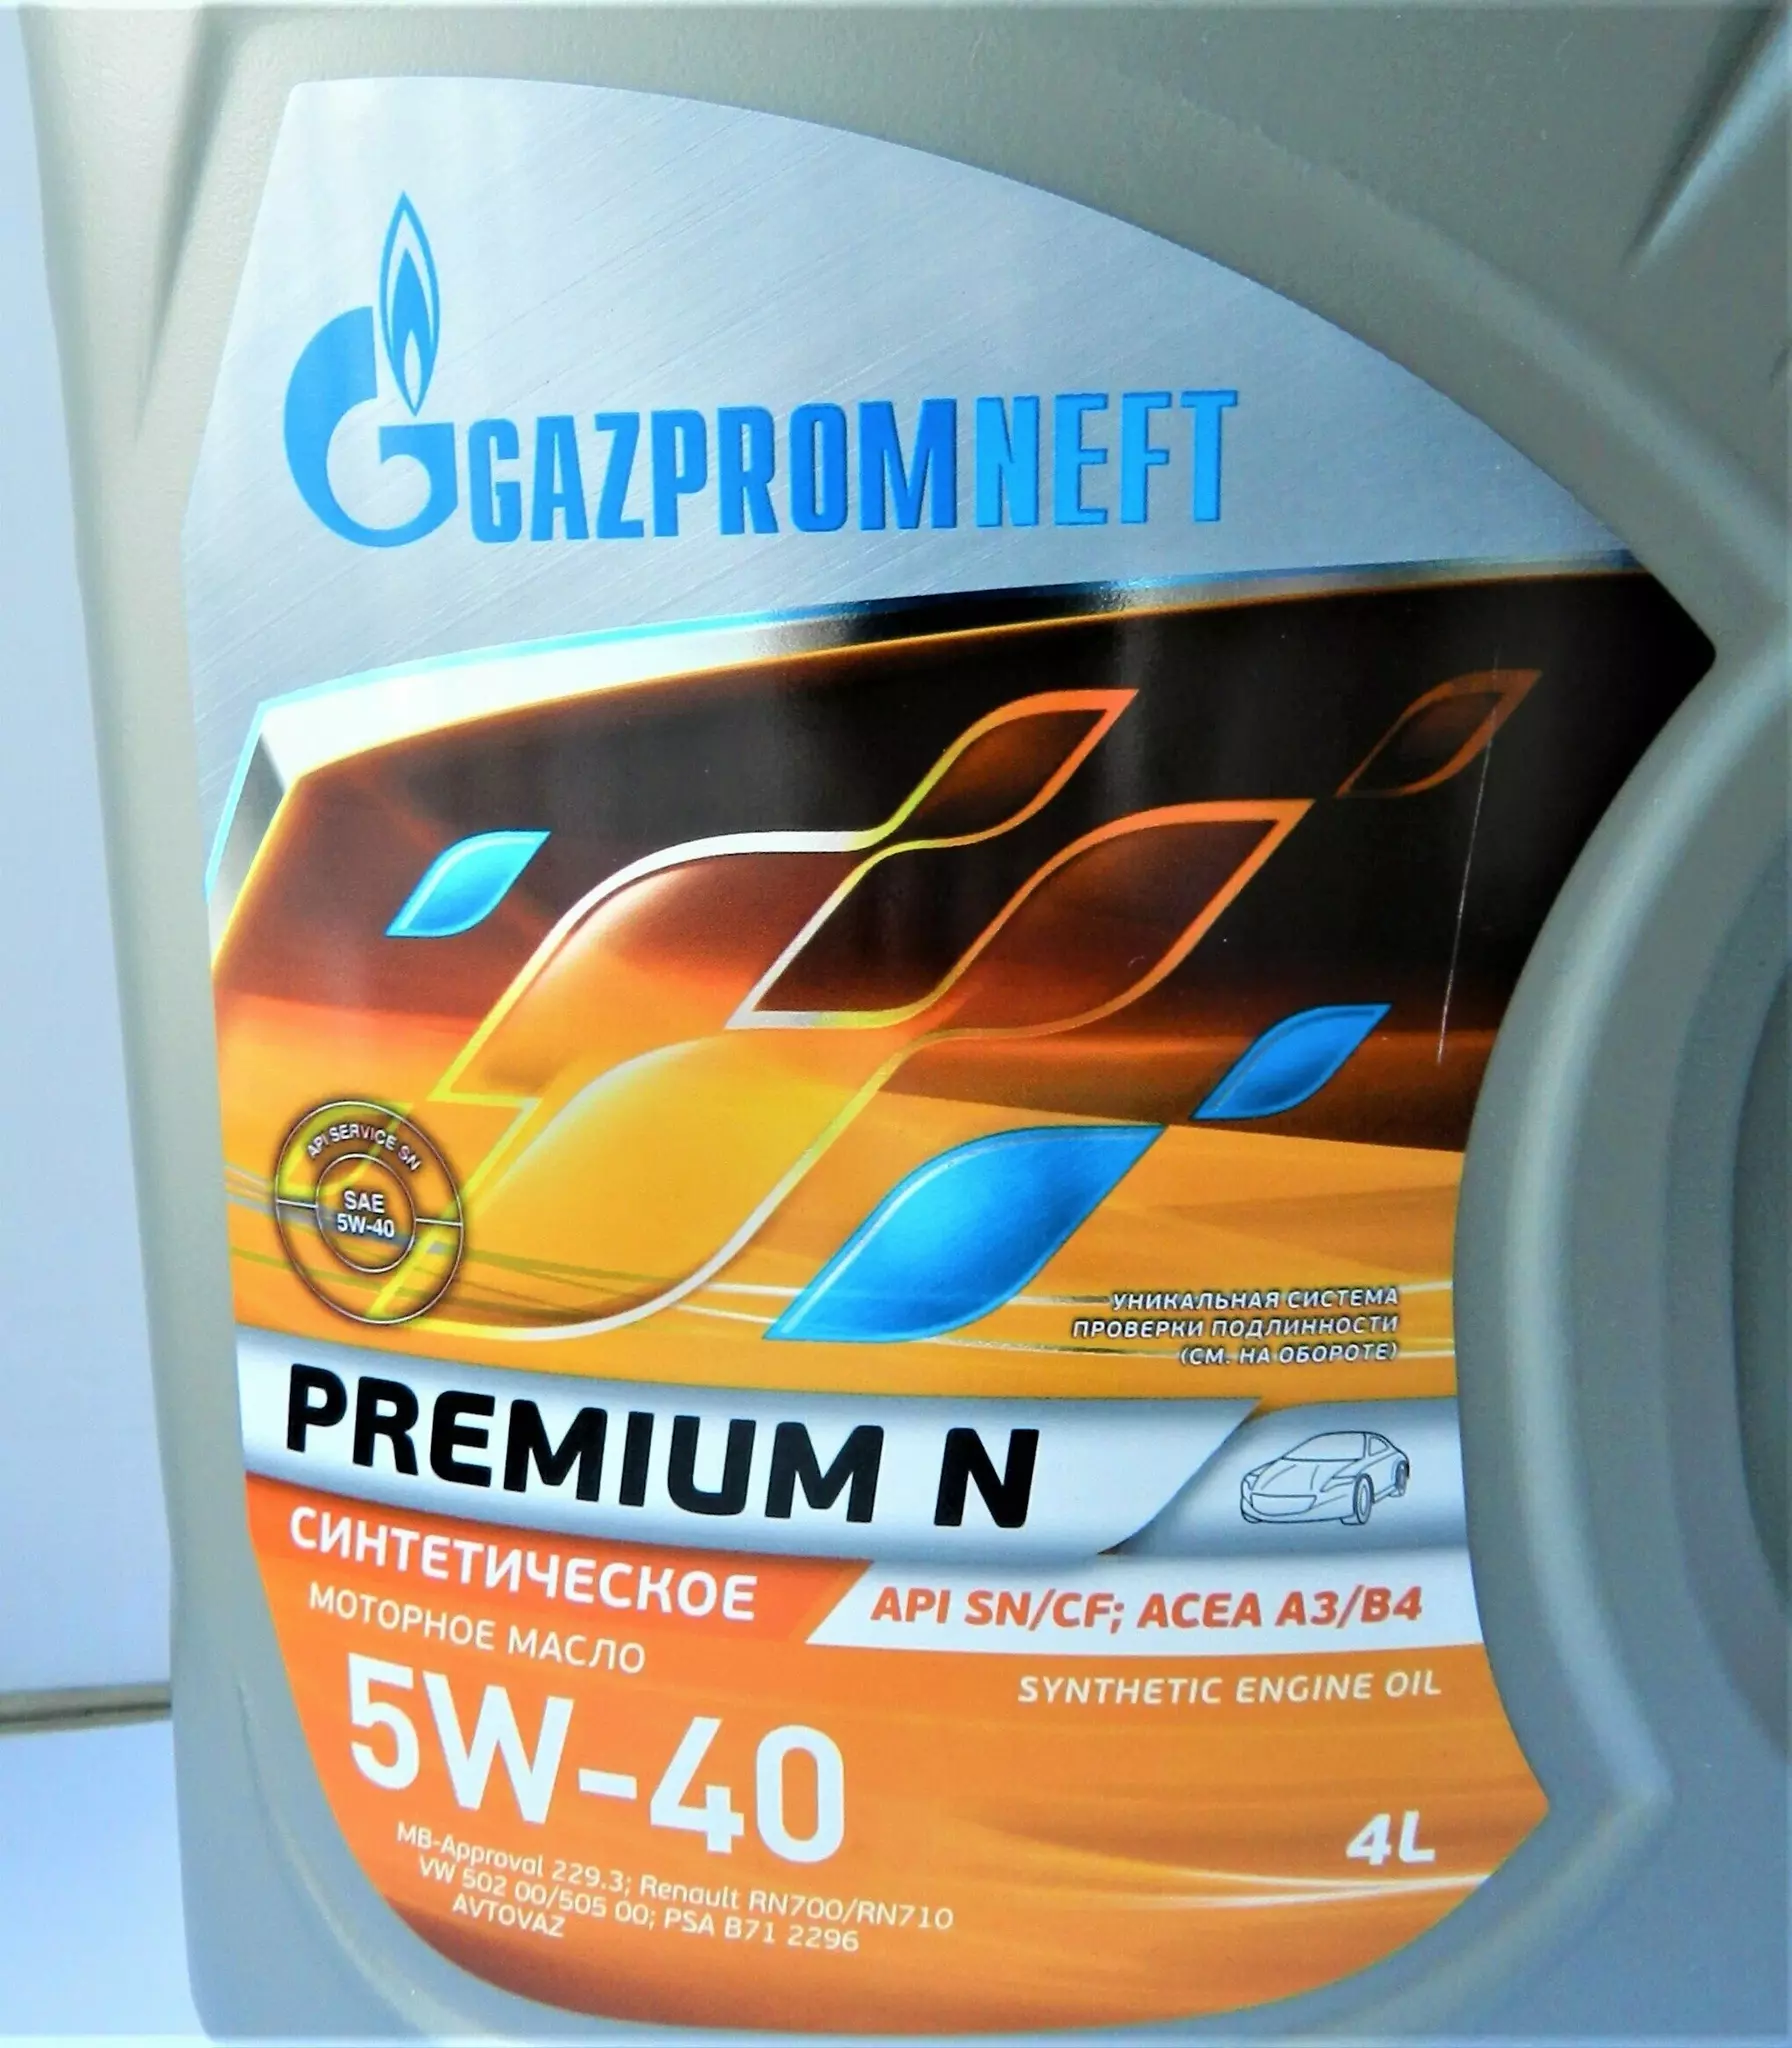 Gazpromneft Premium n 5w-40. Premium n5w40 4л. Масло Premium n 5w-40 4л Gazpromneft. Gazpromneft масло Premium n 5w-40 4л ЕОМ номер.